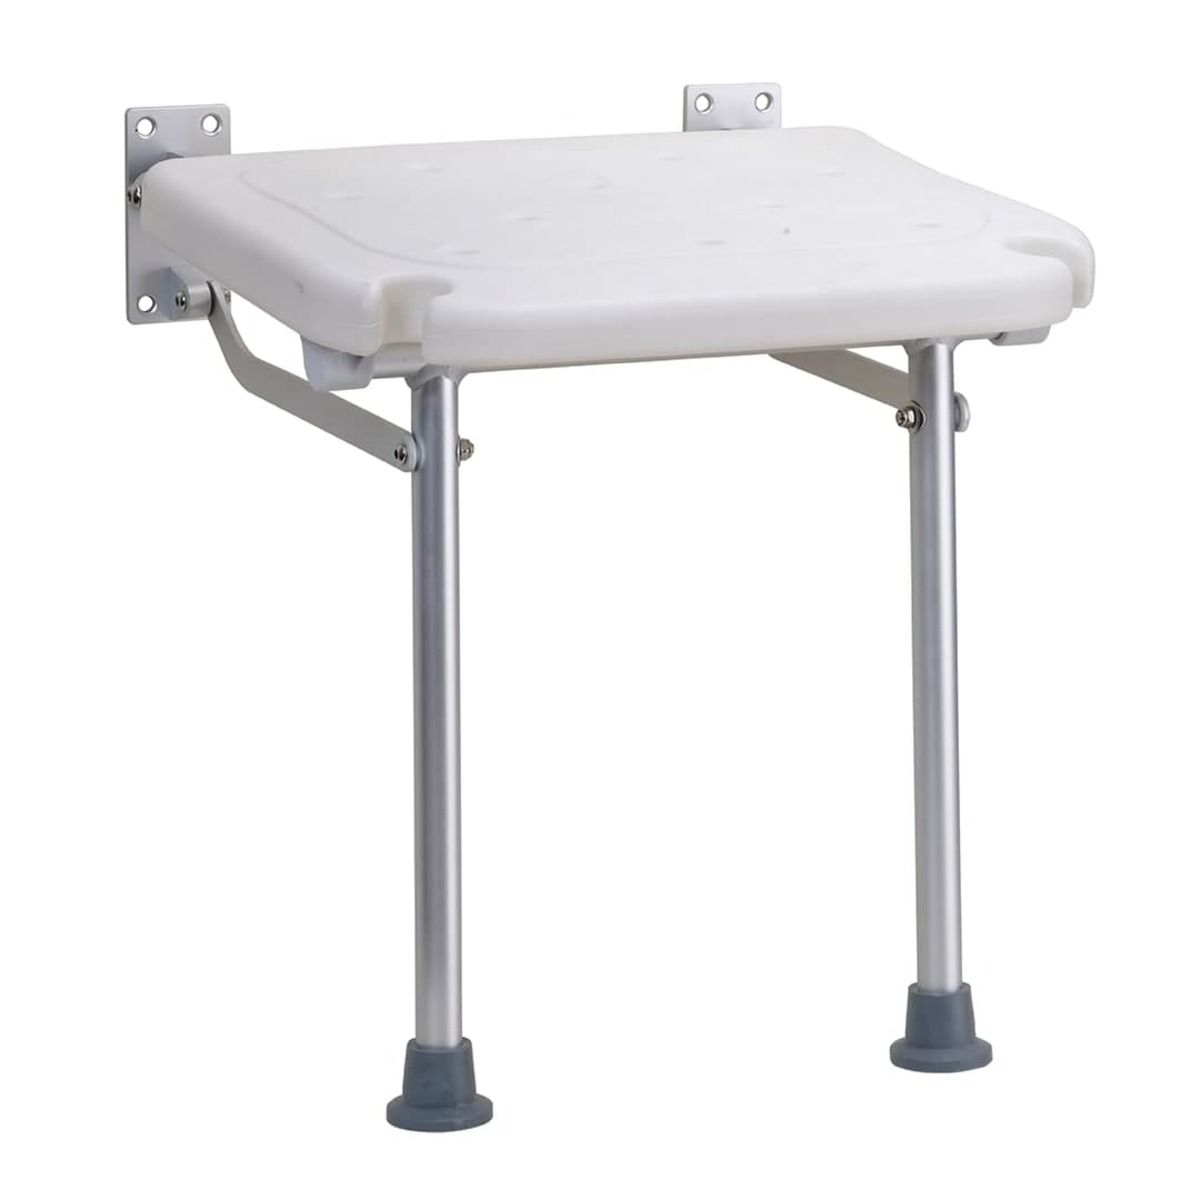 Sprchové sedátko Bemeta sklopné bílá/chrom 353125033 - Siko - koupelny - kuchyně